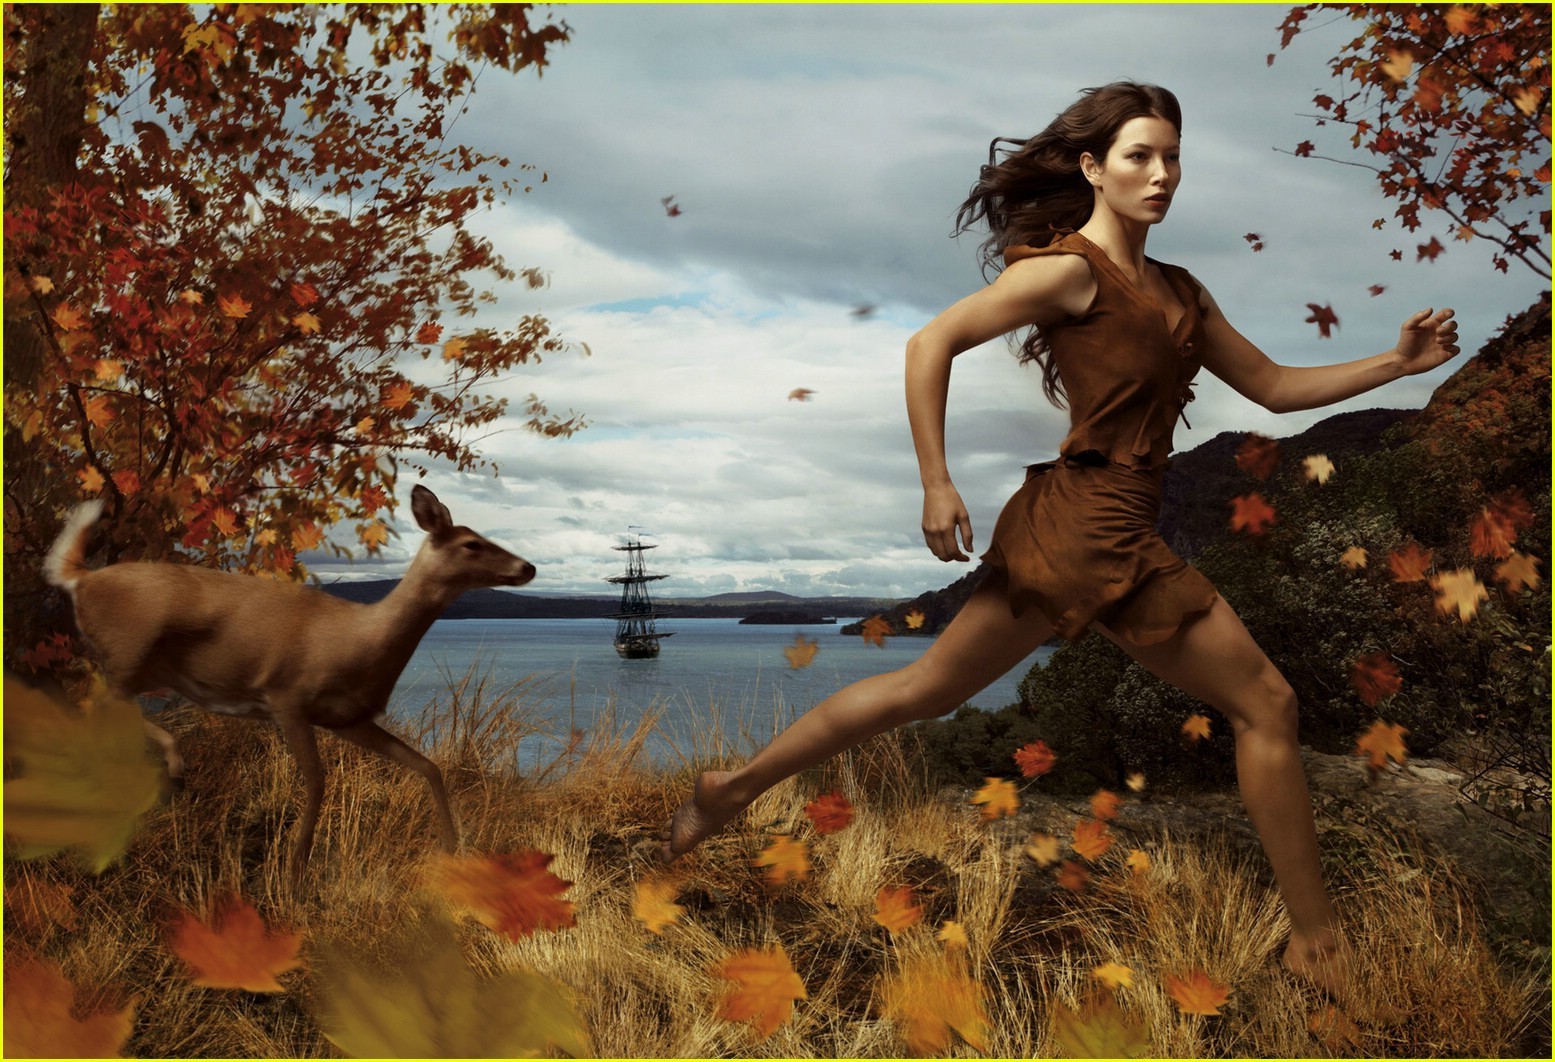 General 1555x1062 Jessica Biel women actress brunette Annie Leibovitz Pocahontas running women outdoors barefoot animals mammals deer celebrity